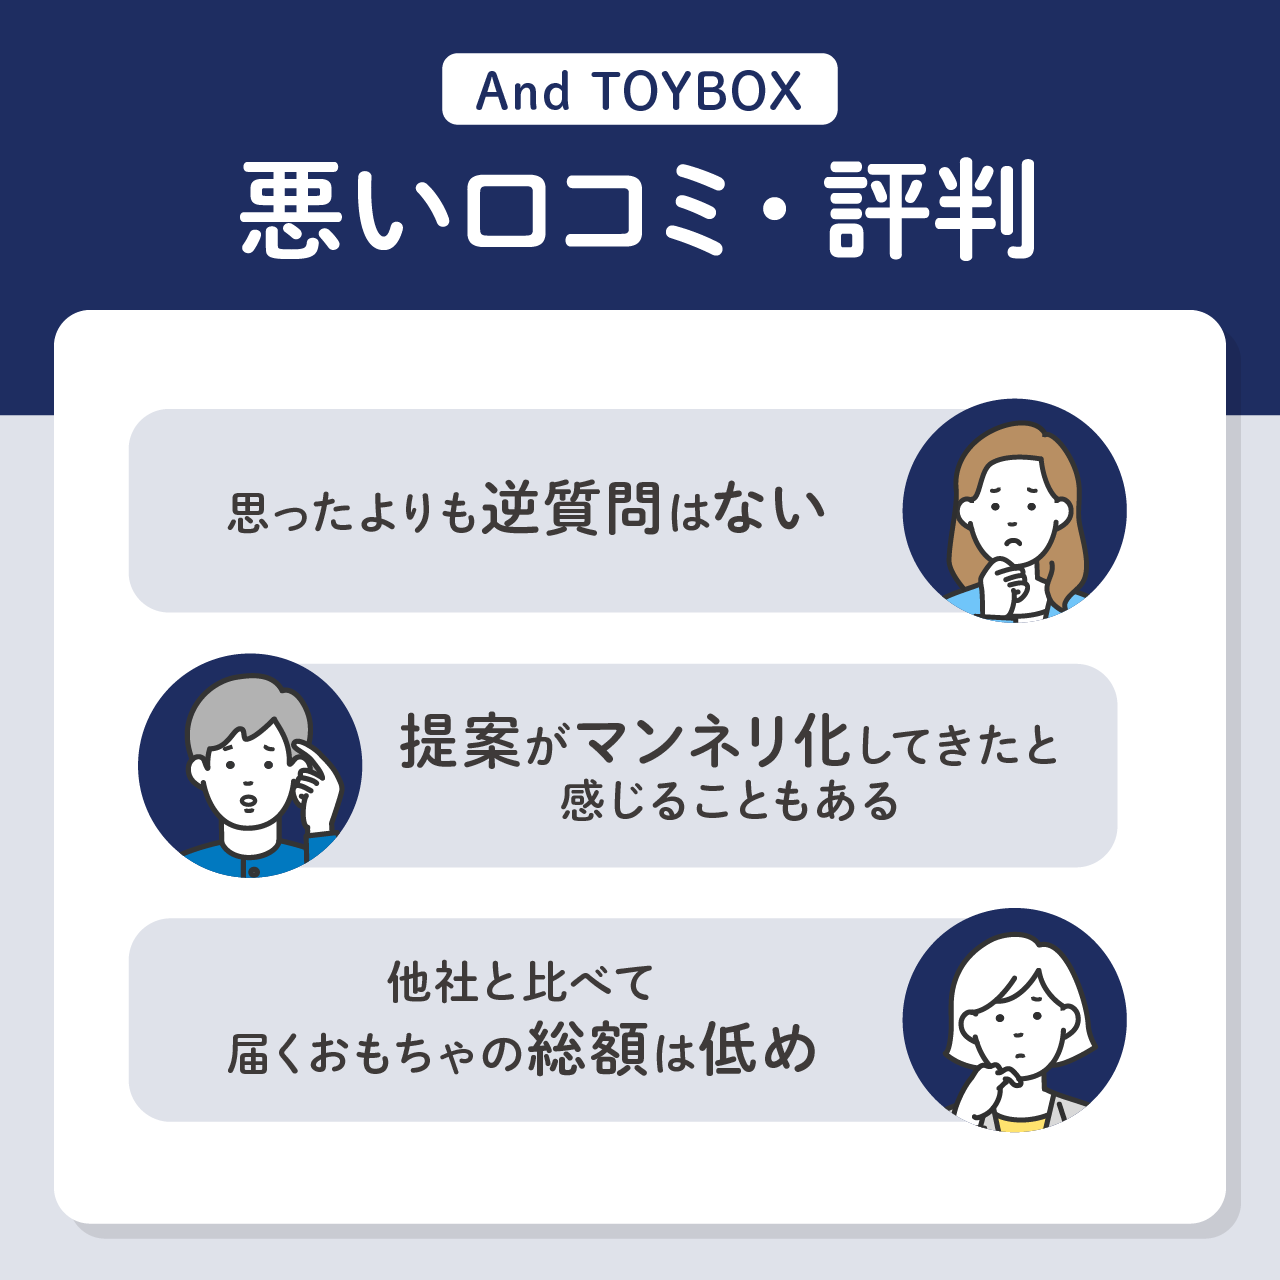 And TOYBOX(アンドトイボックス)の悪い口コミ・評判